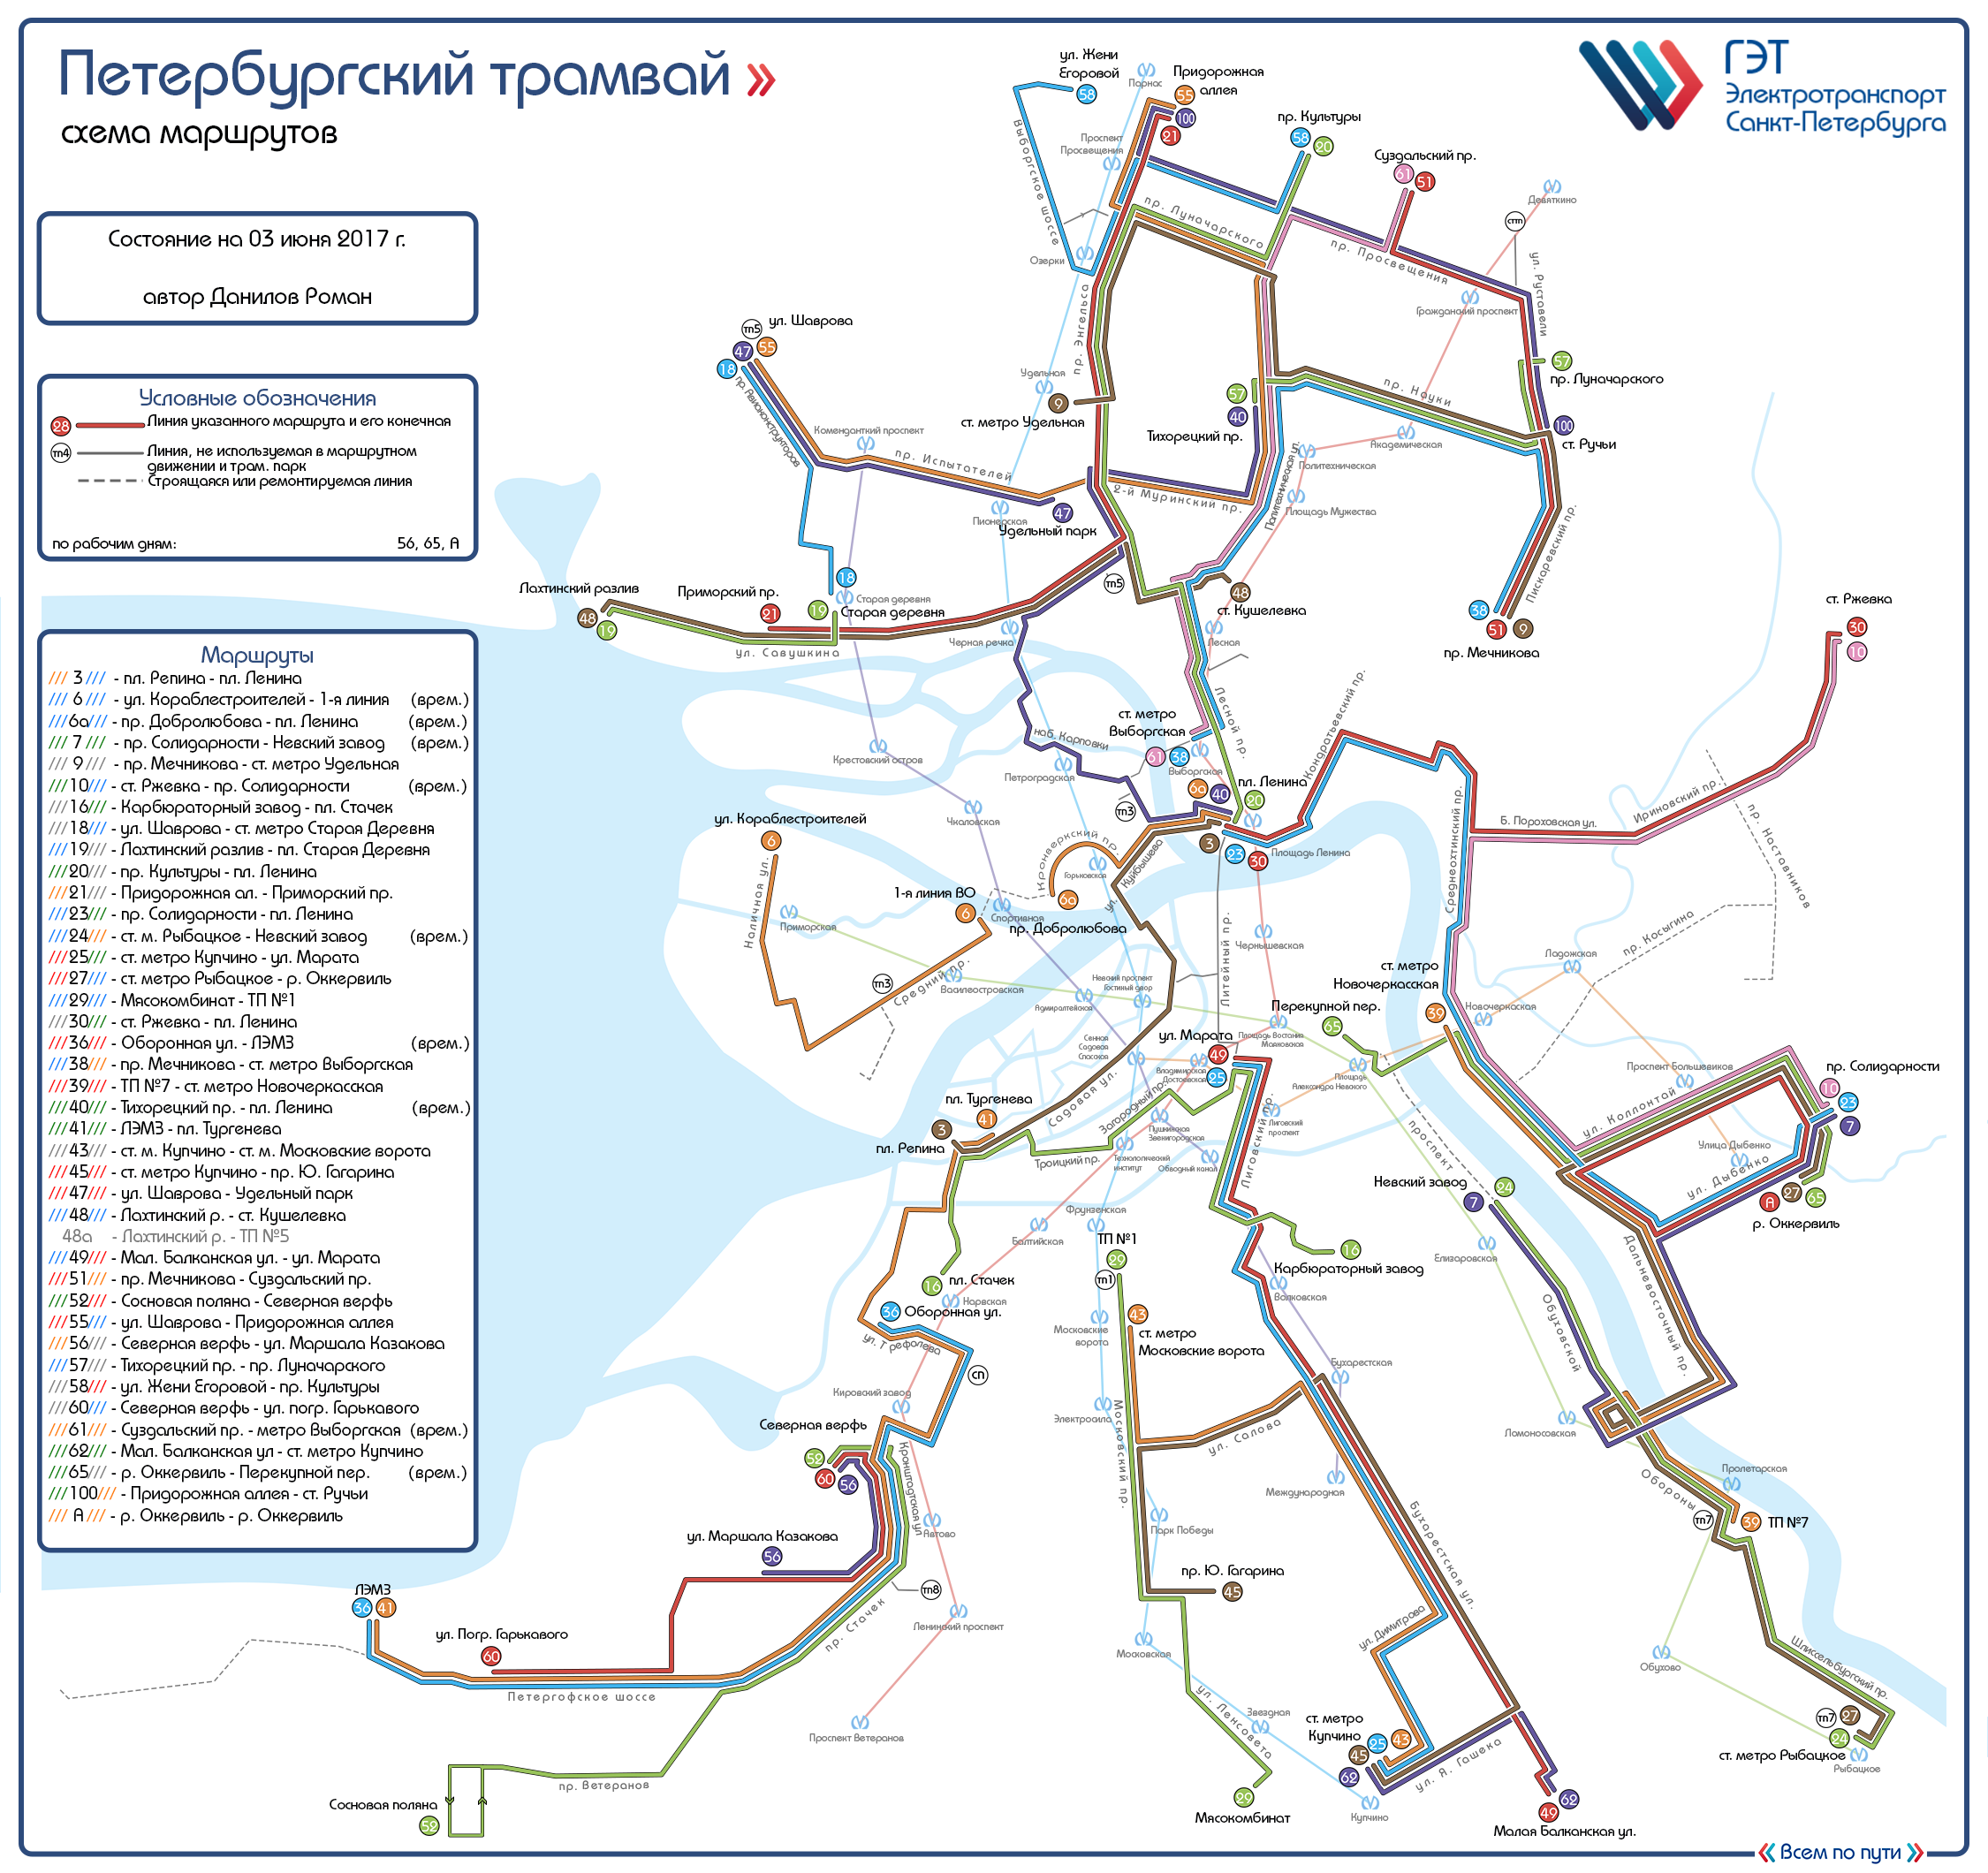 St Petersburg — Systemwide Maps